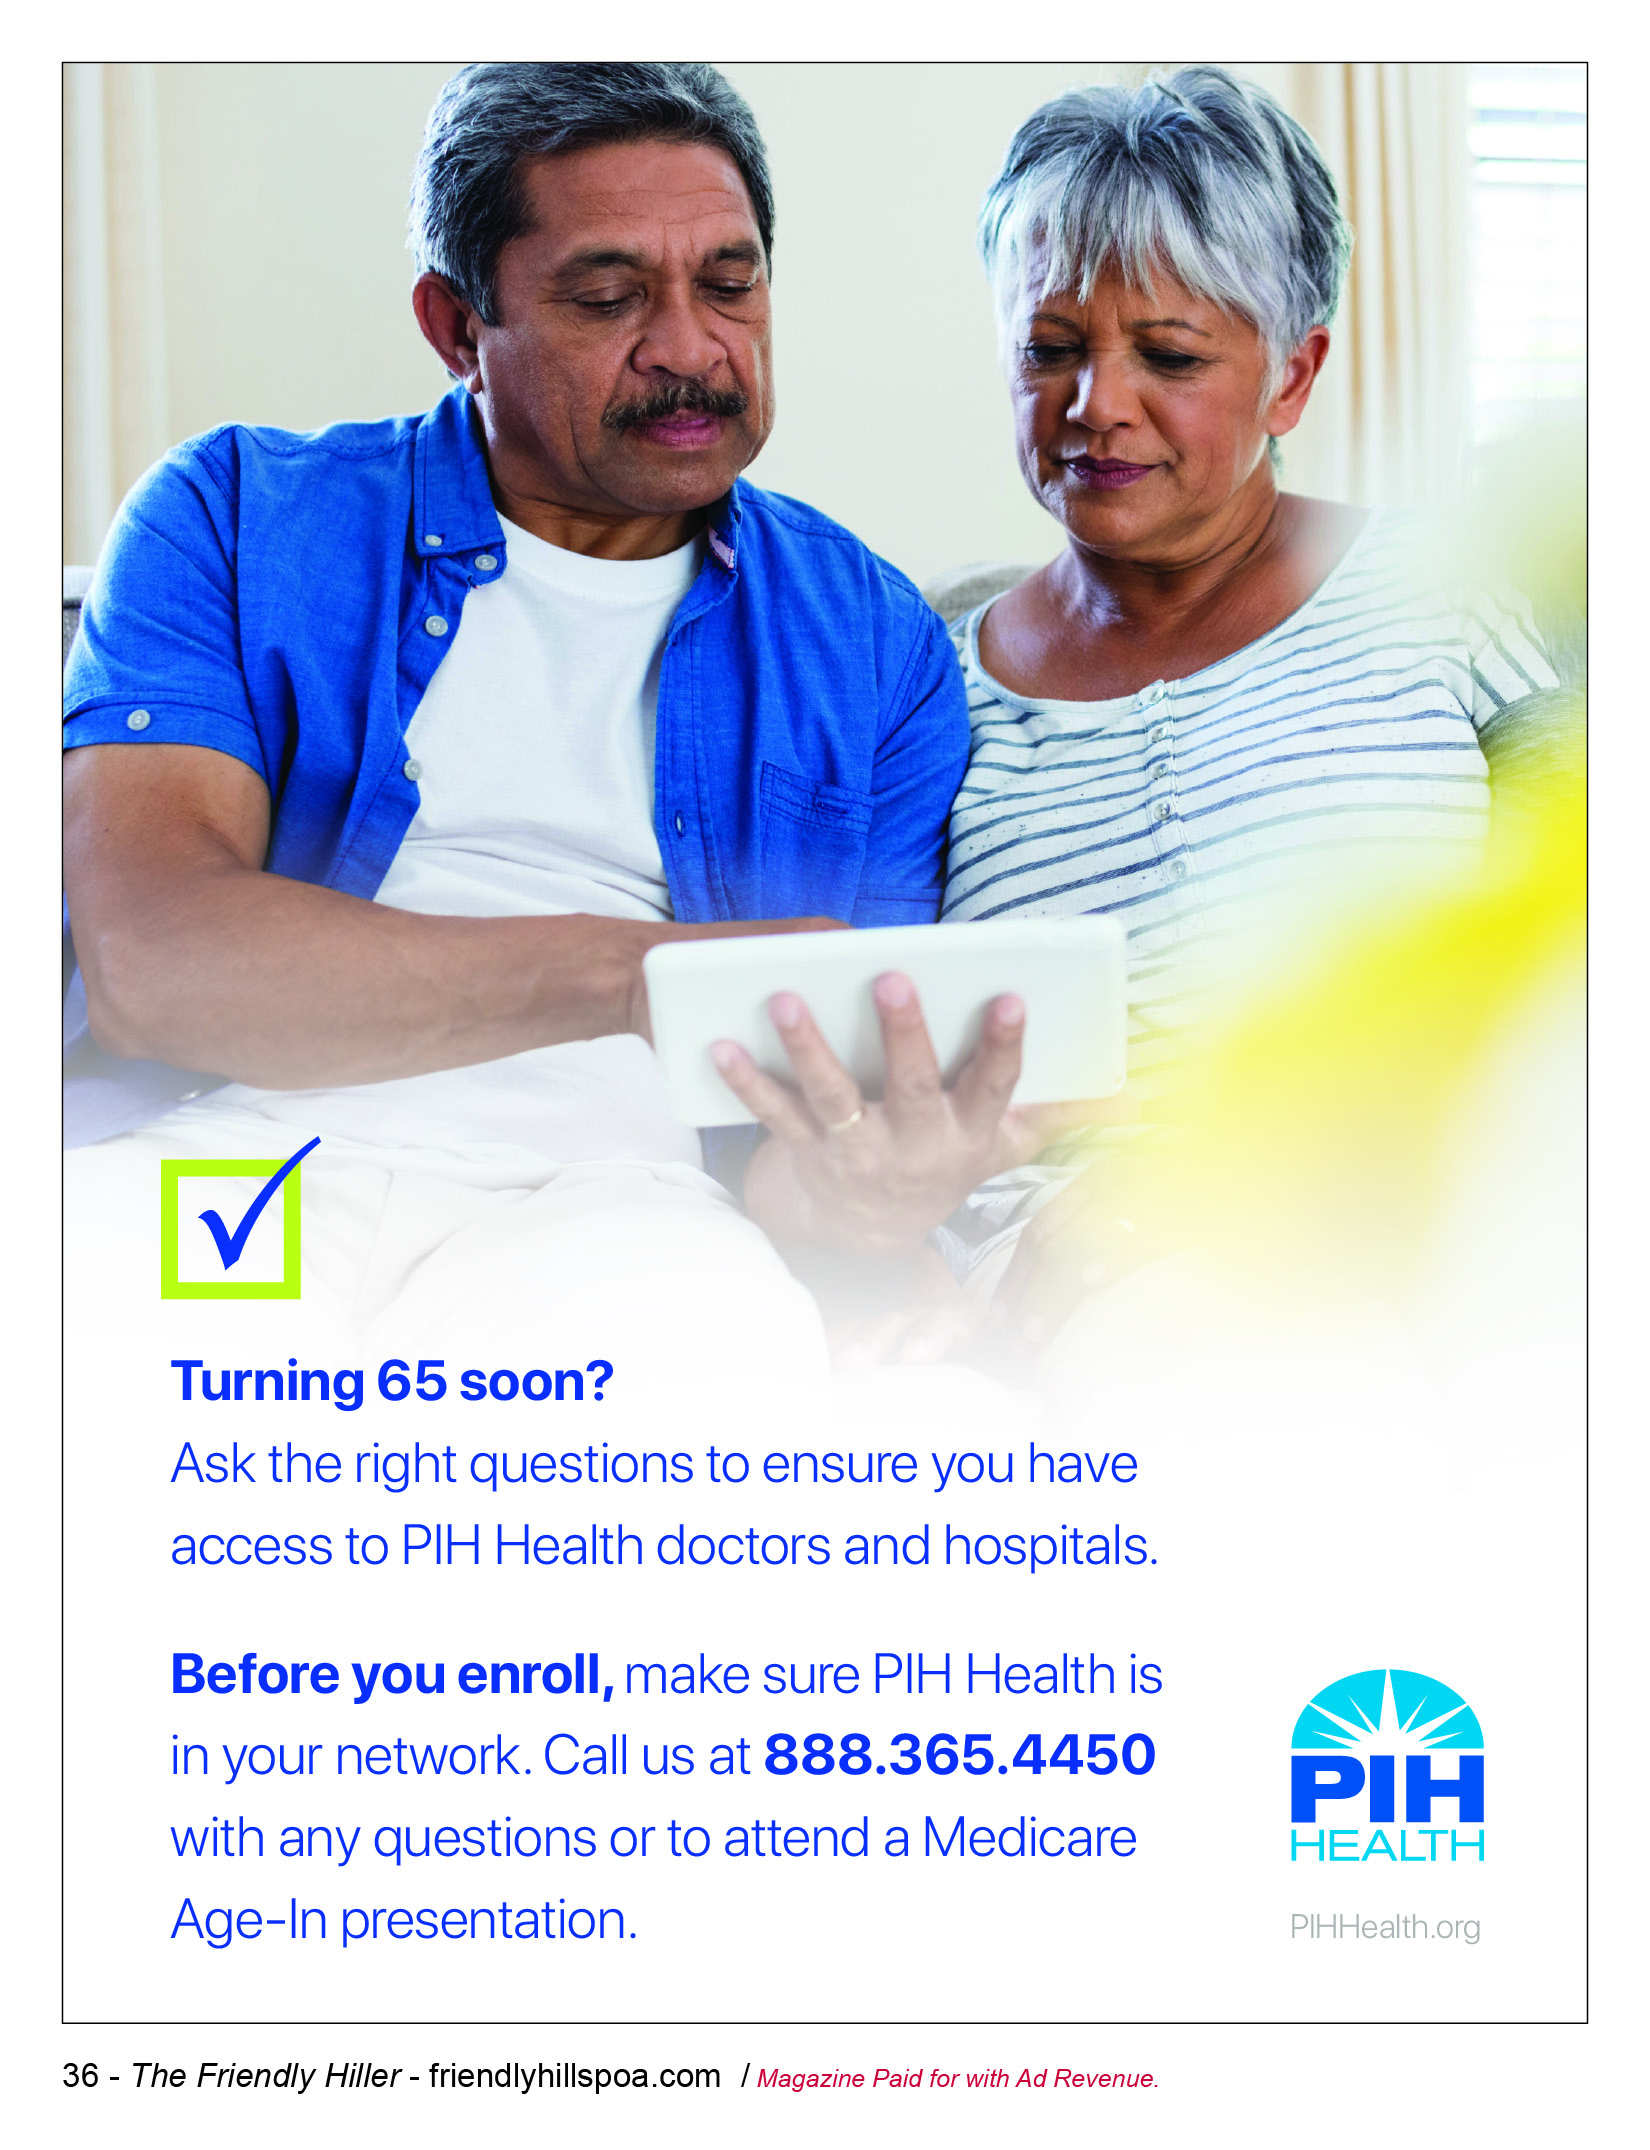 PIH Health Turning 65?